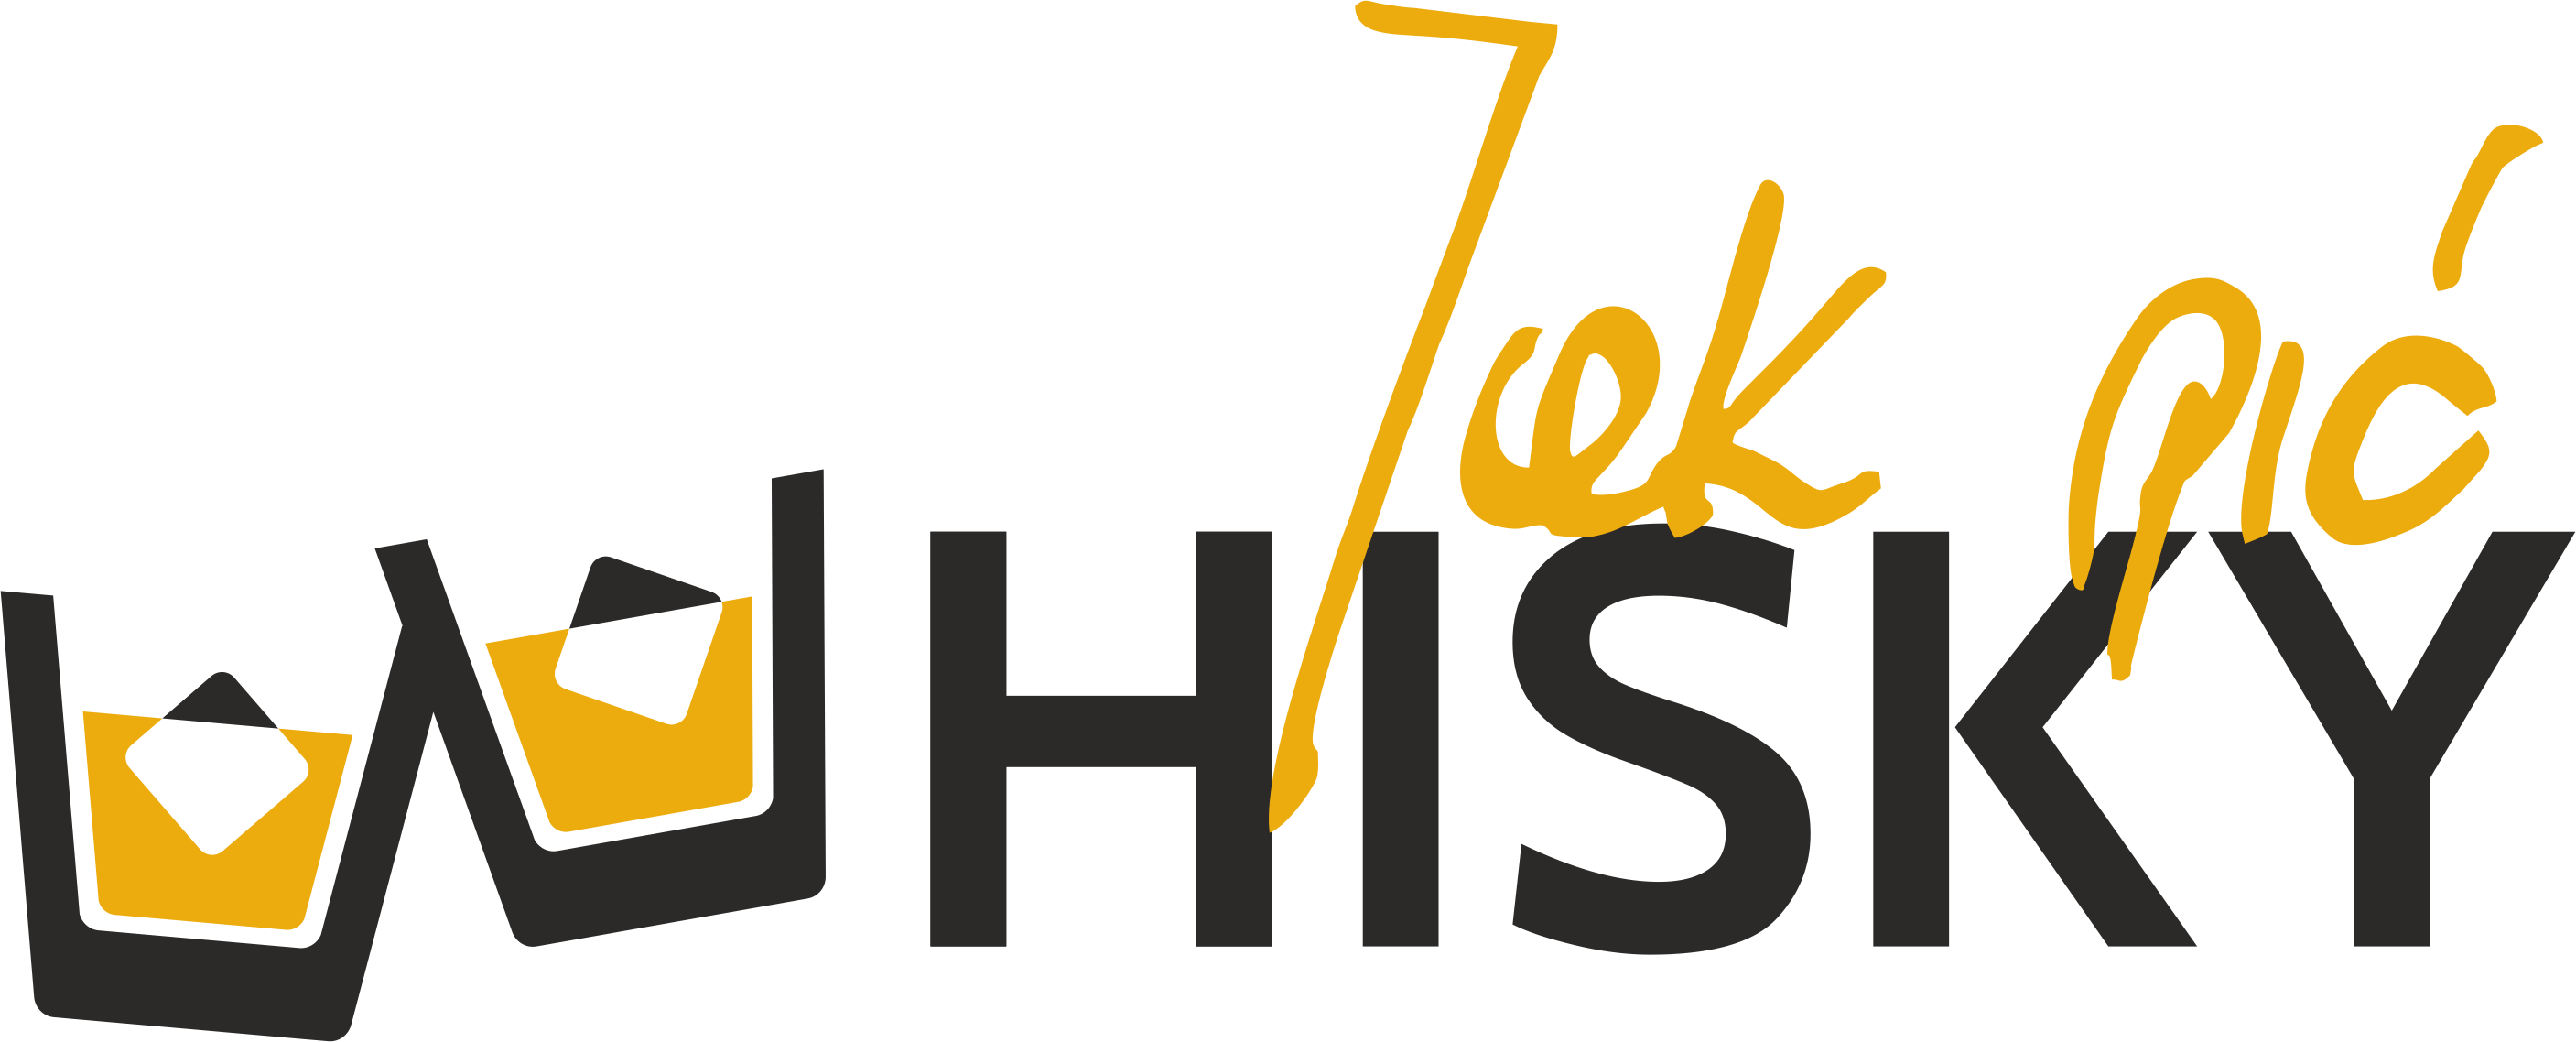 Logo JPW